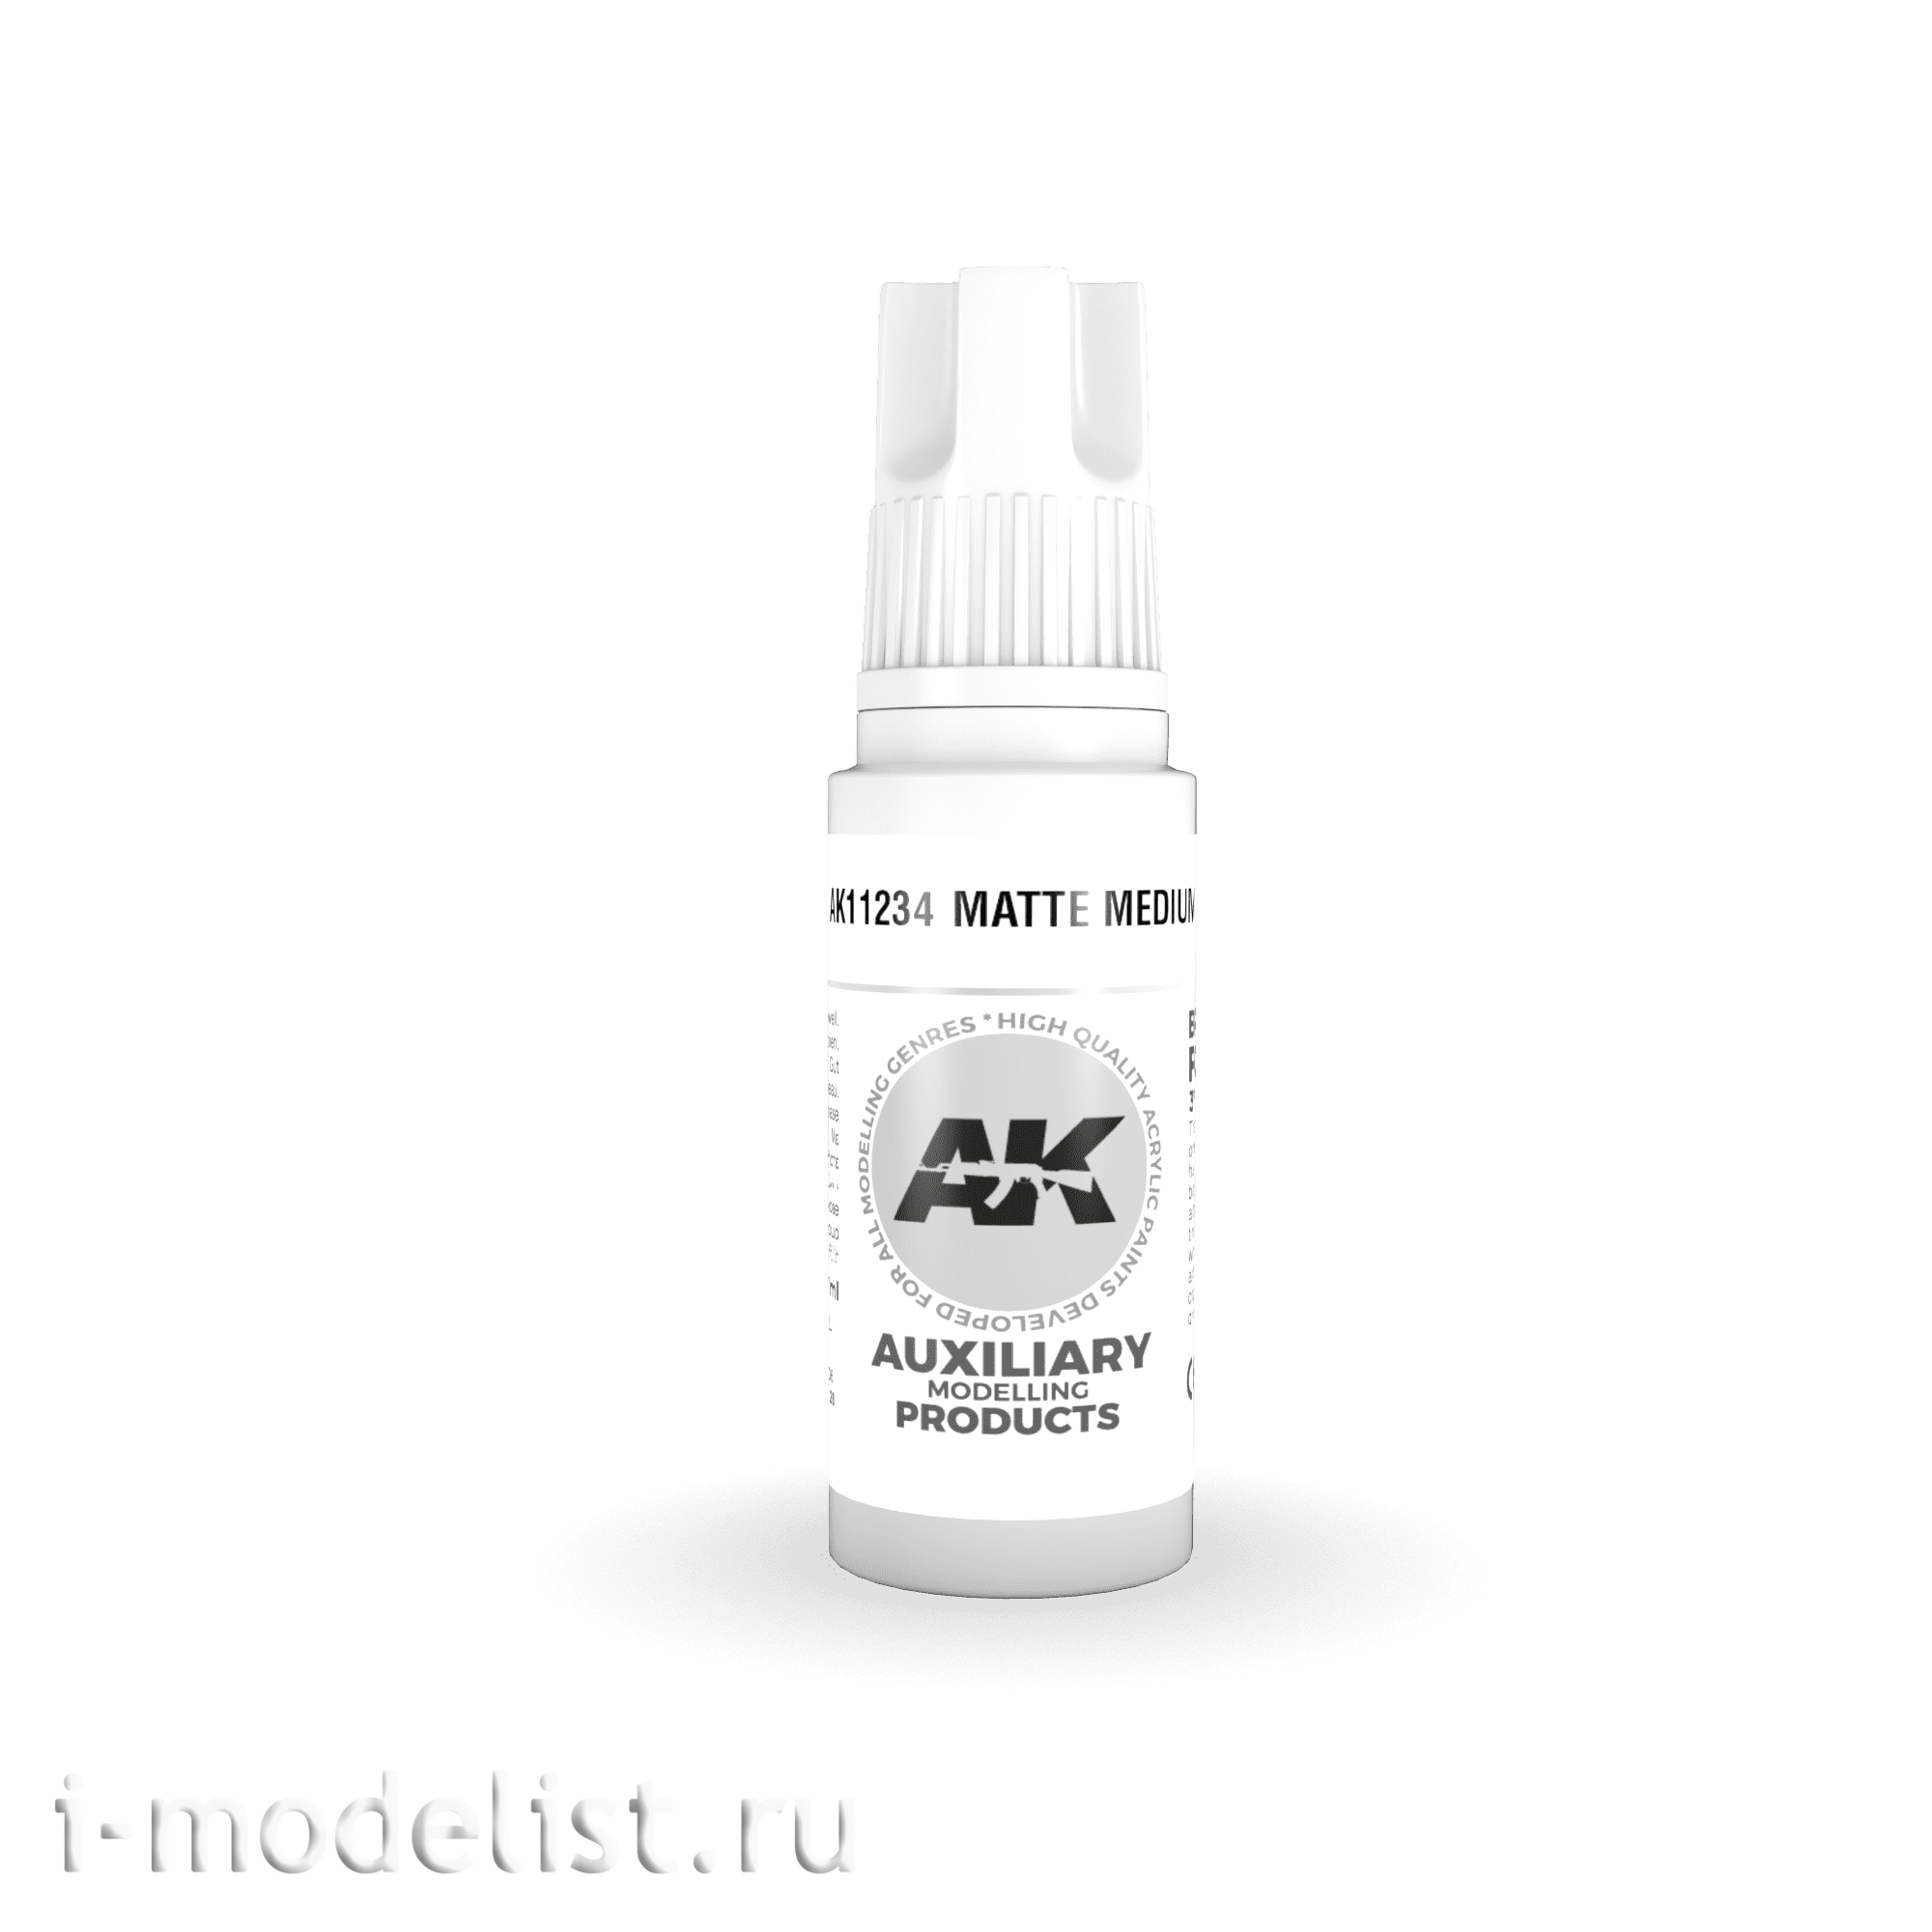 AK11234 AK Interactive acrylic Paint 3rd Generation Matte Medium 17ml